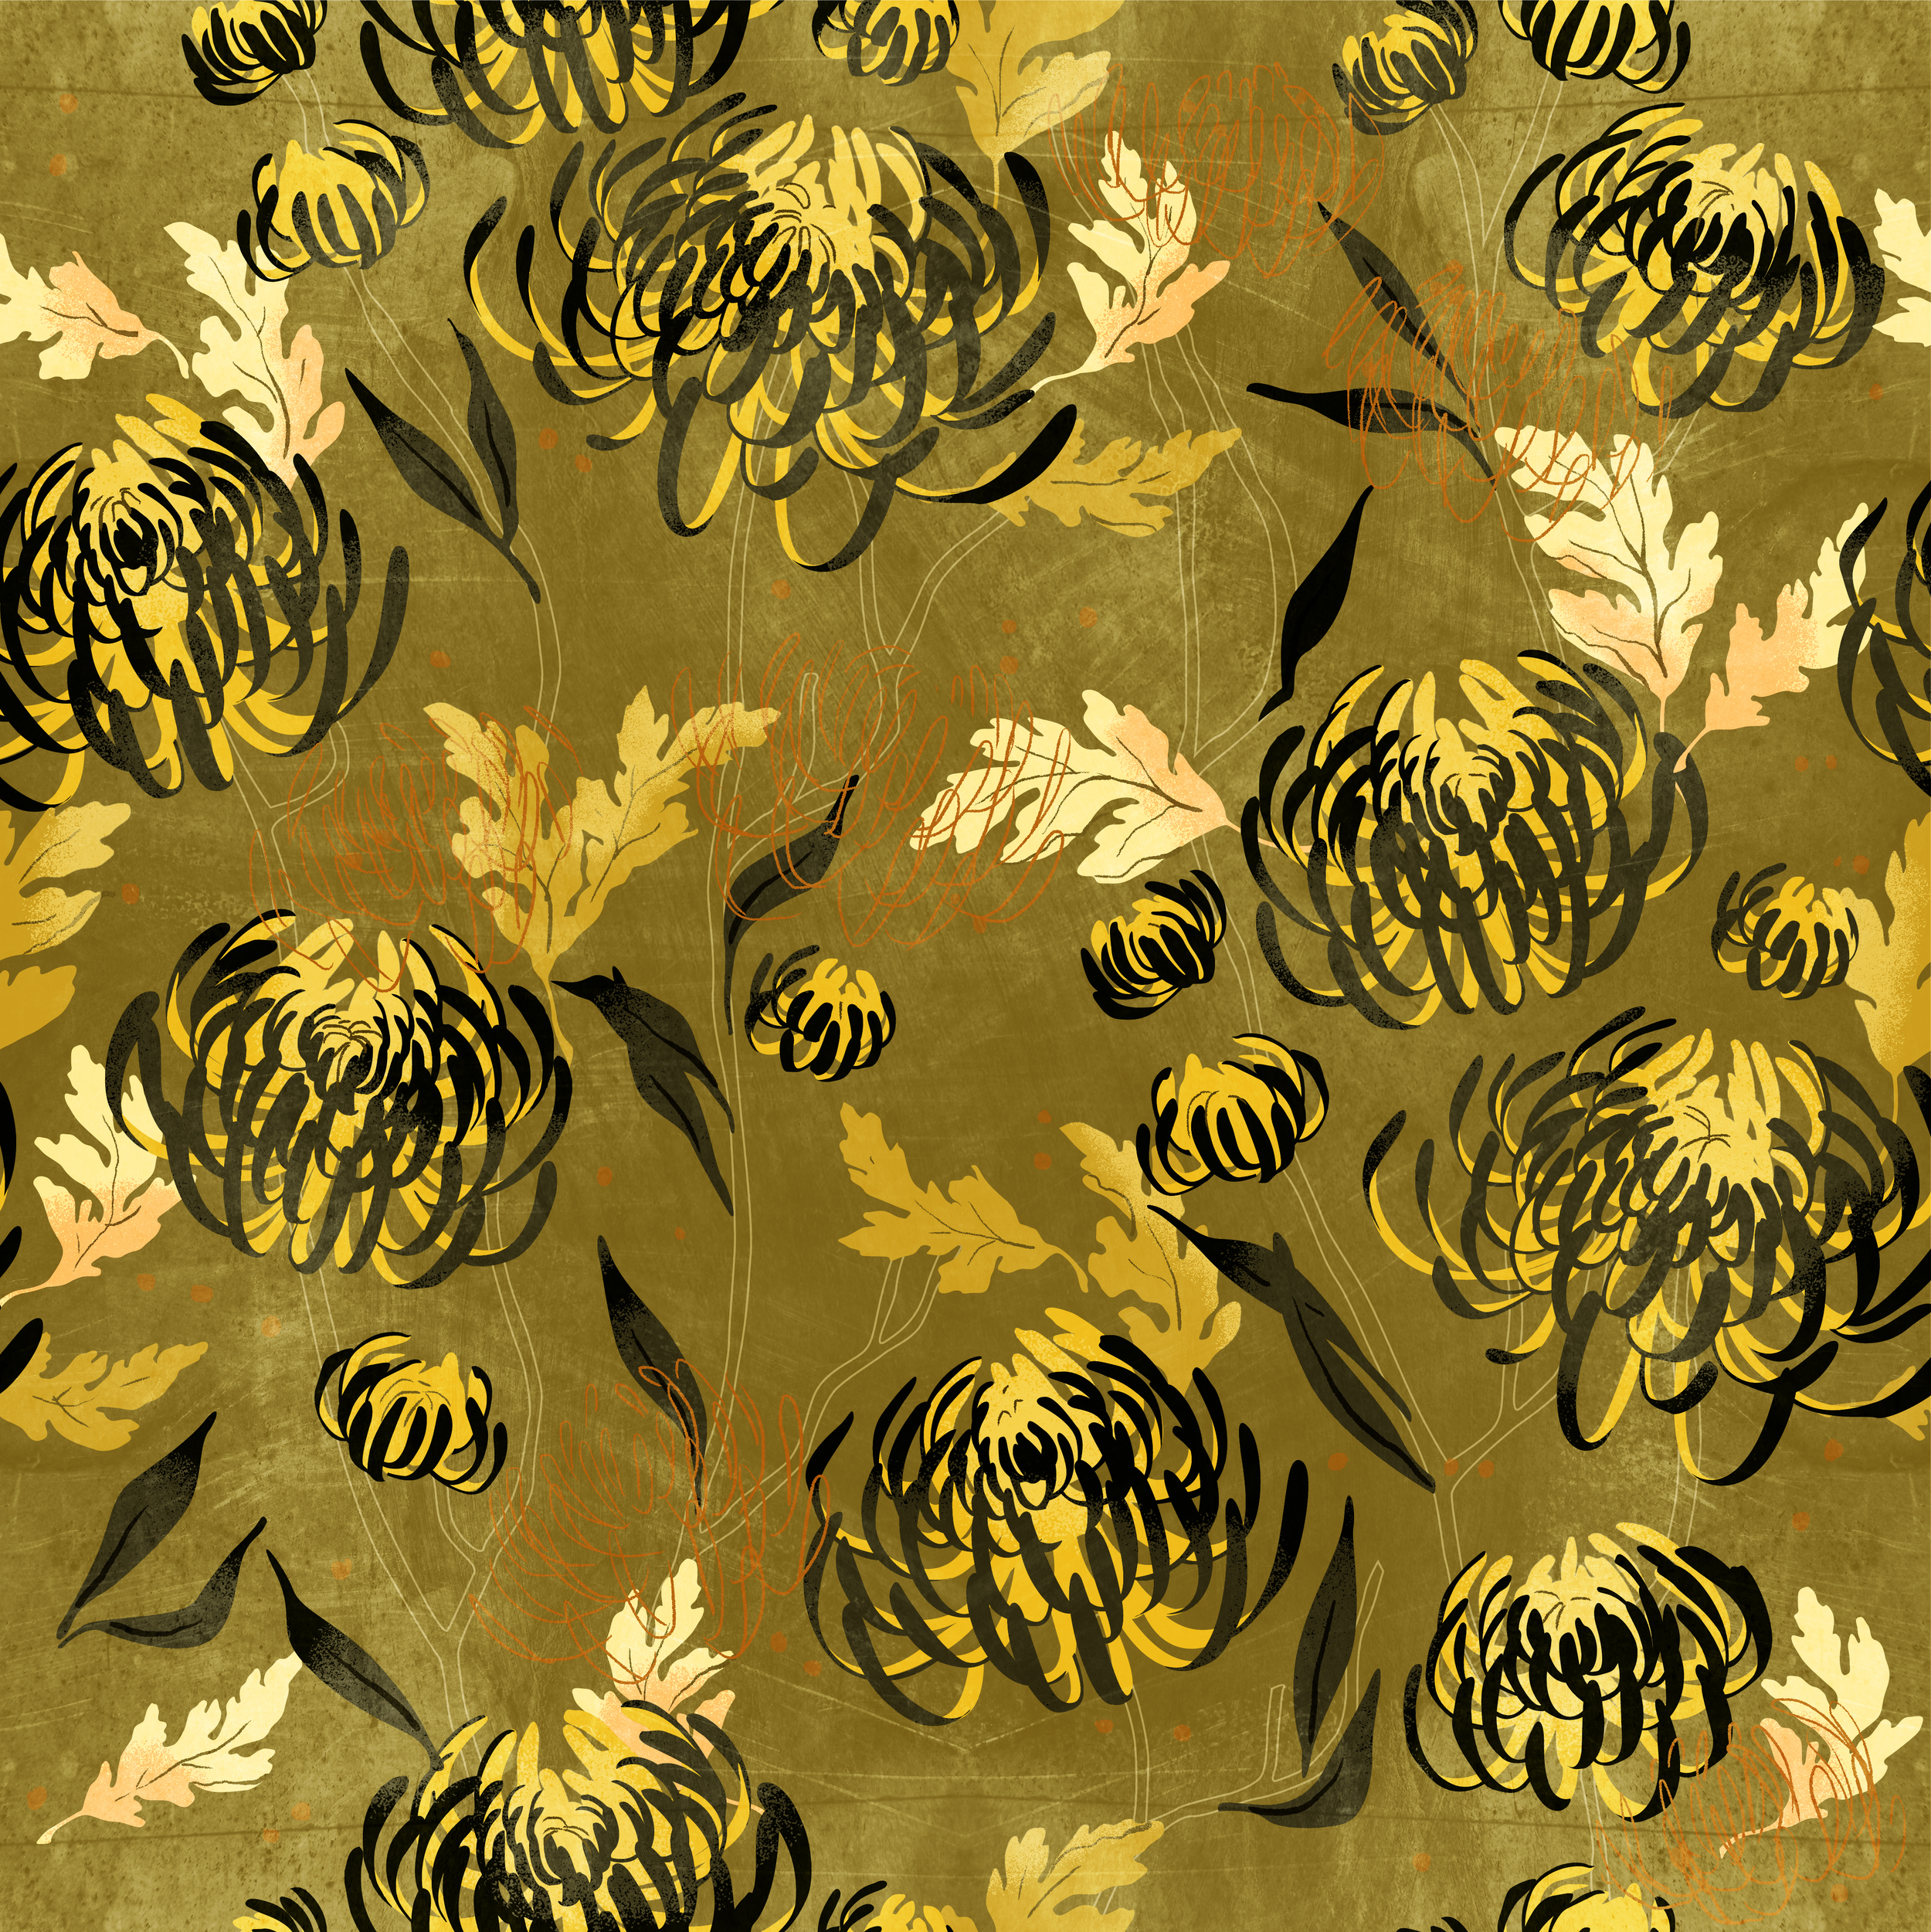 Chrysanthemum_lindsaynohl_fullsize_cropped.jpg